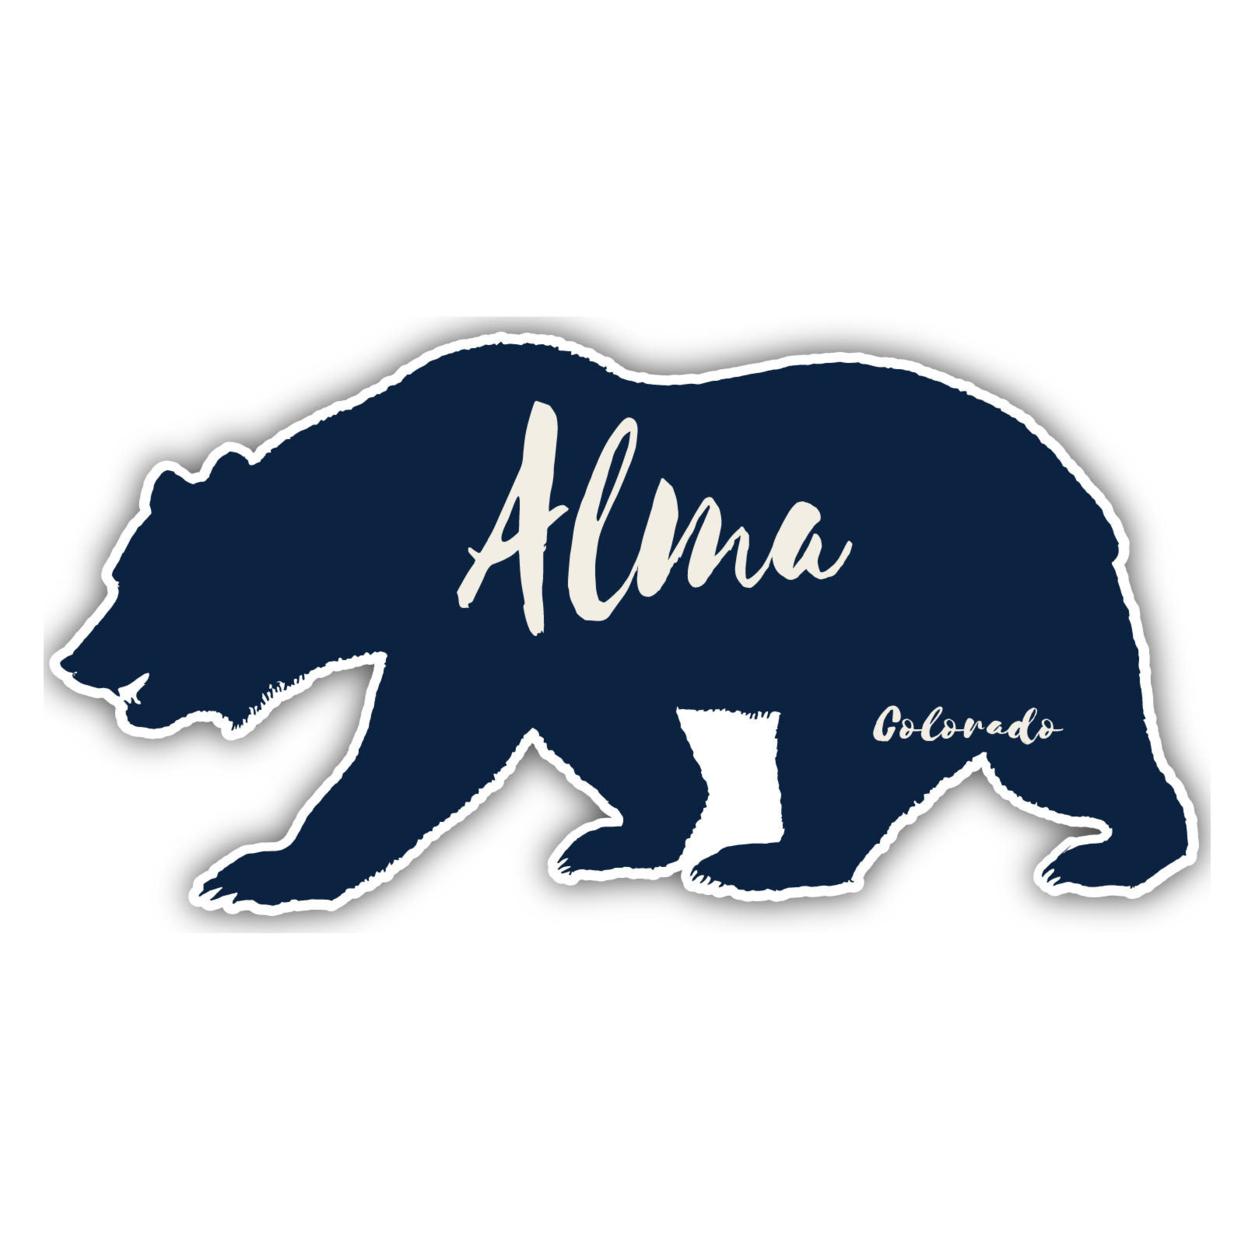 Alma Colorado Souvenir Decorative Stickers (Choose Theme And Size) - 4-Pack, 6-Inch, Tent